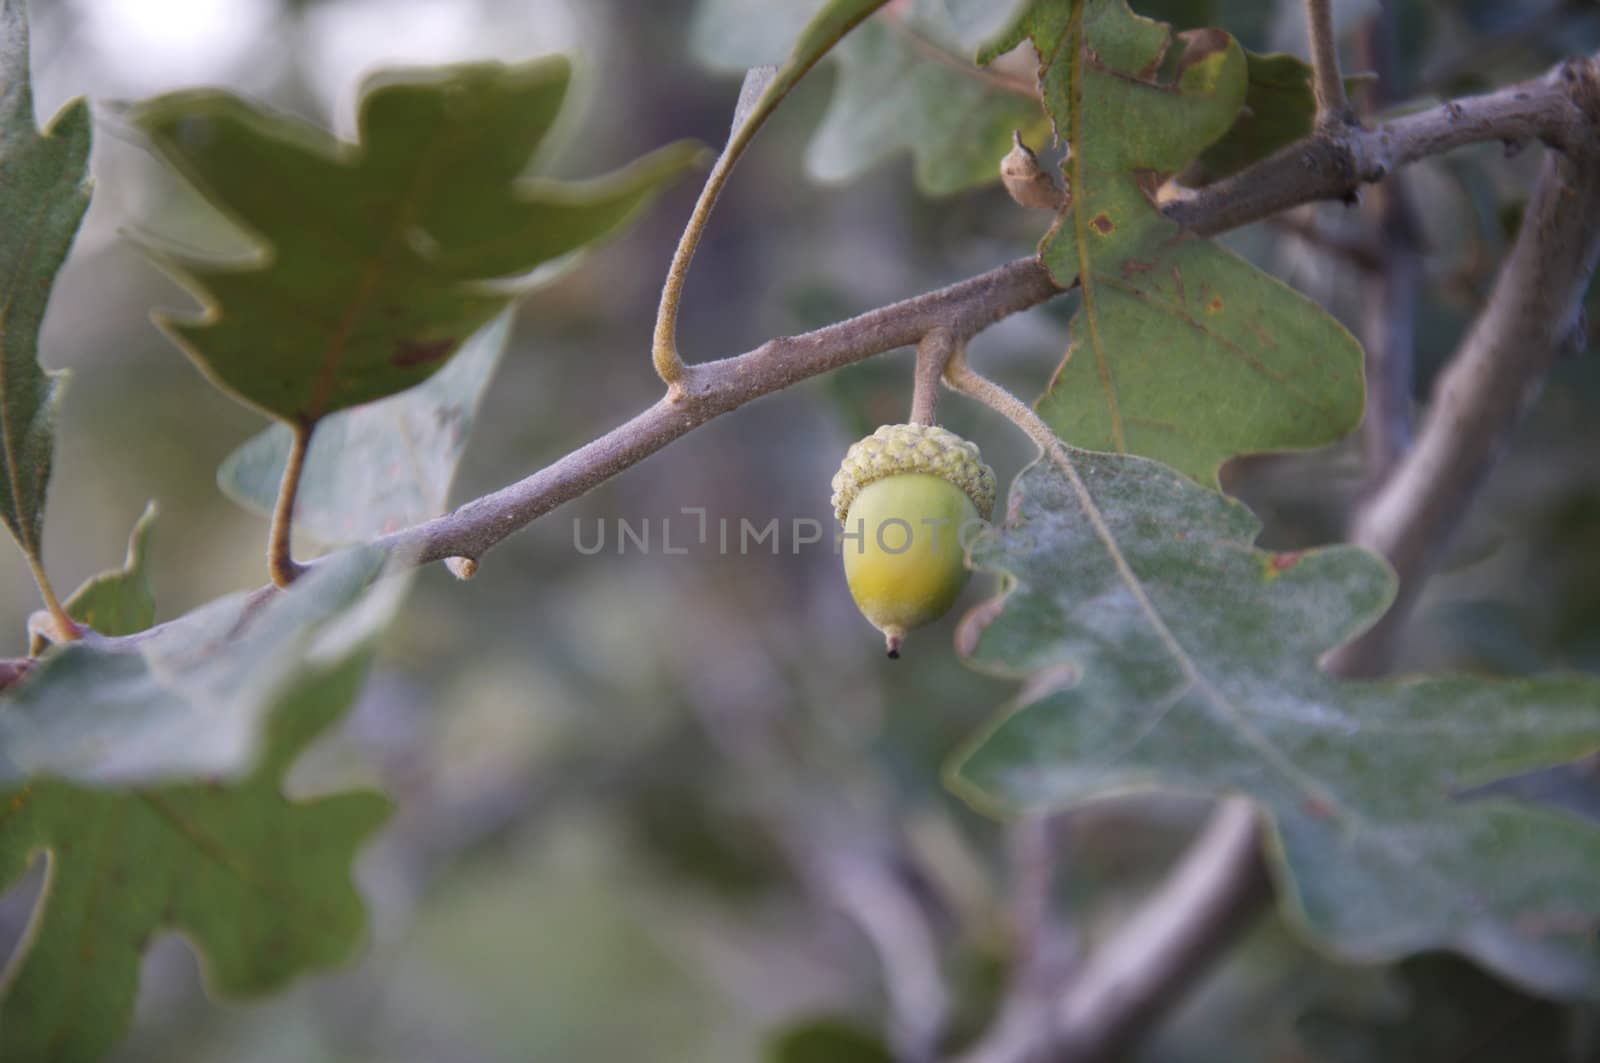 A single acorn stands alon on an oak branch in the fall.